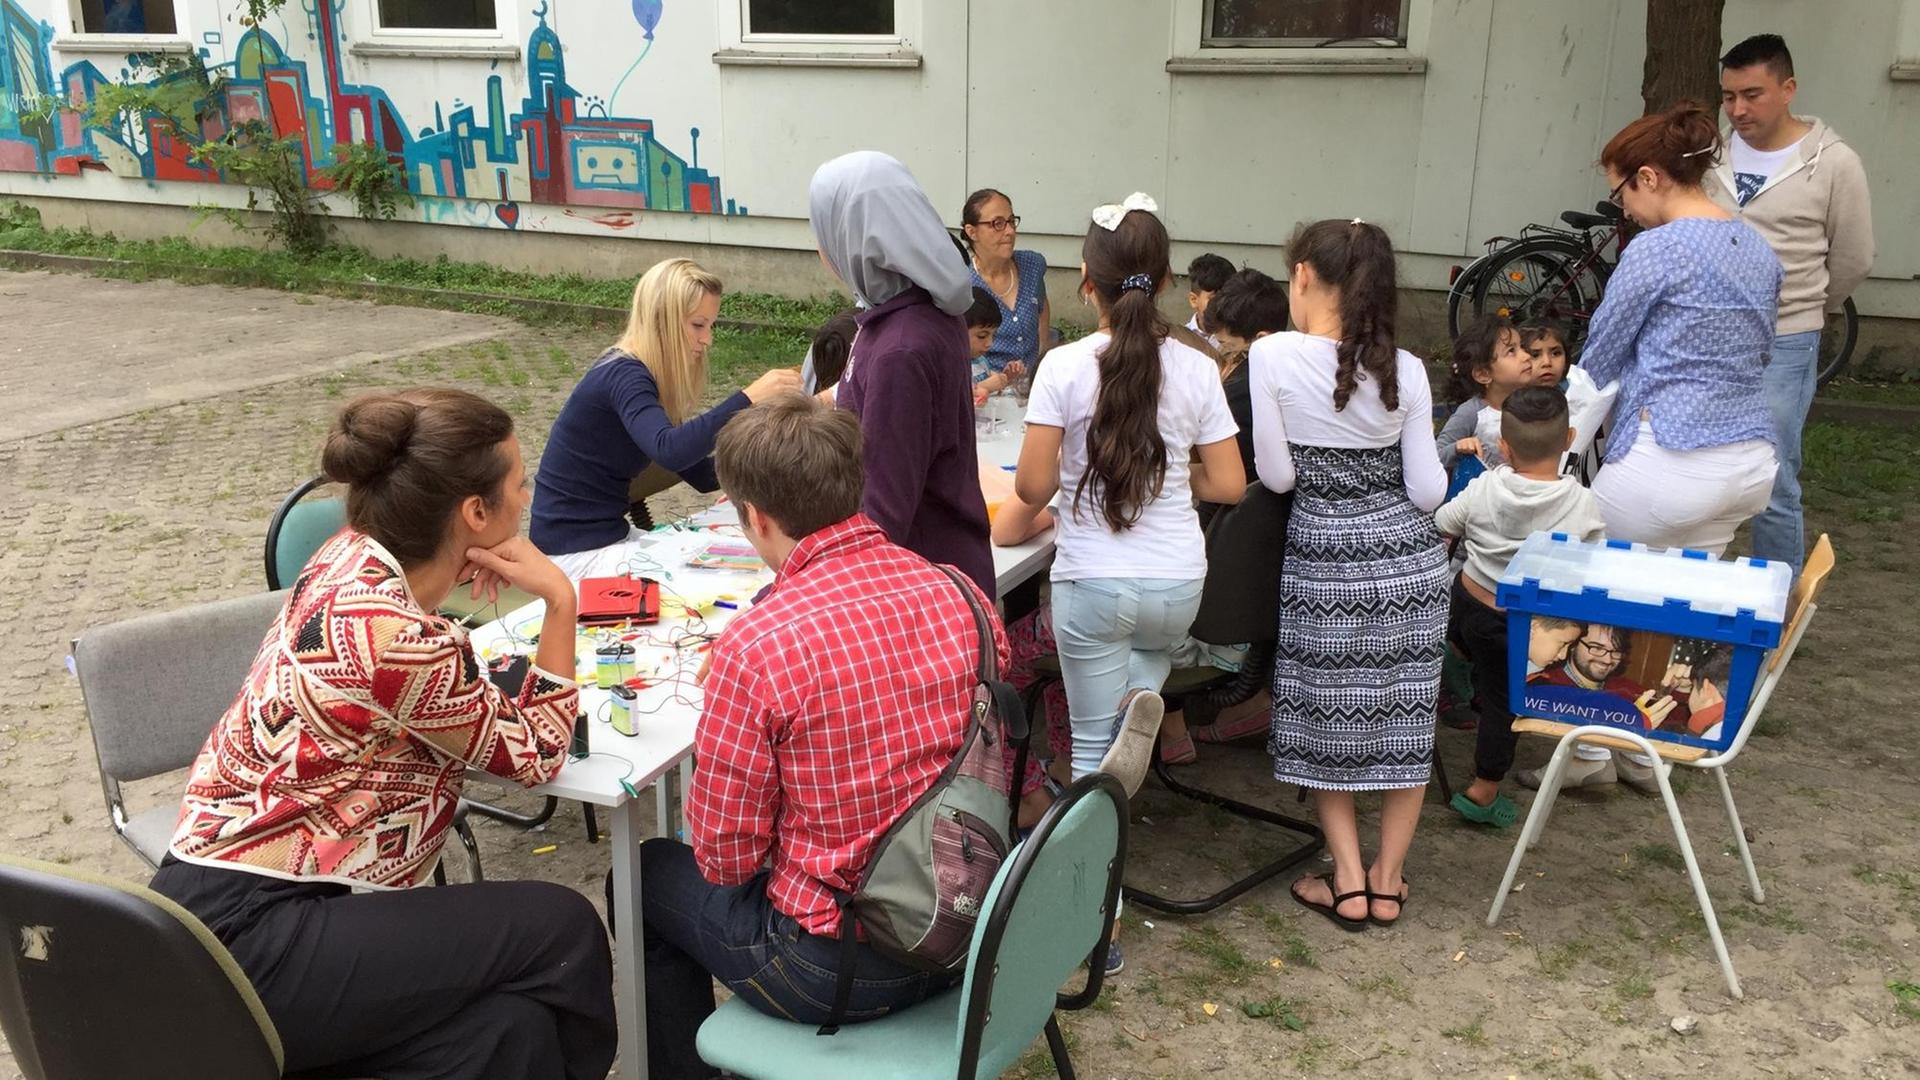 Das Projekt "Physik für Flüchtlinge" in einer Flüchtlingsunterkunft in Berlin